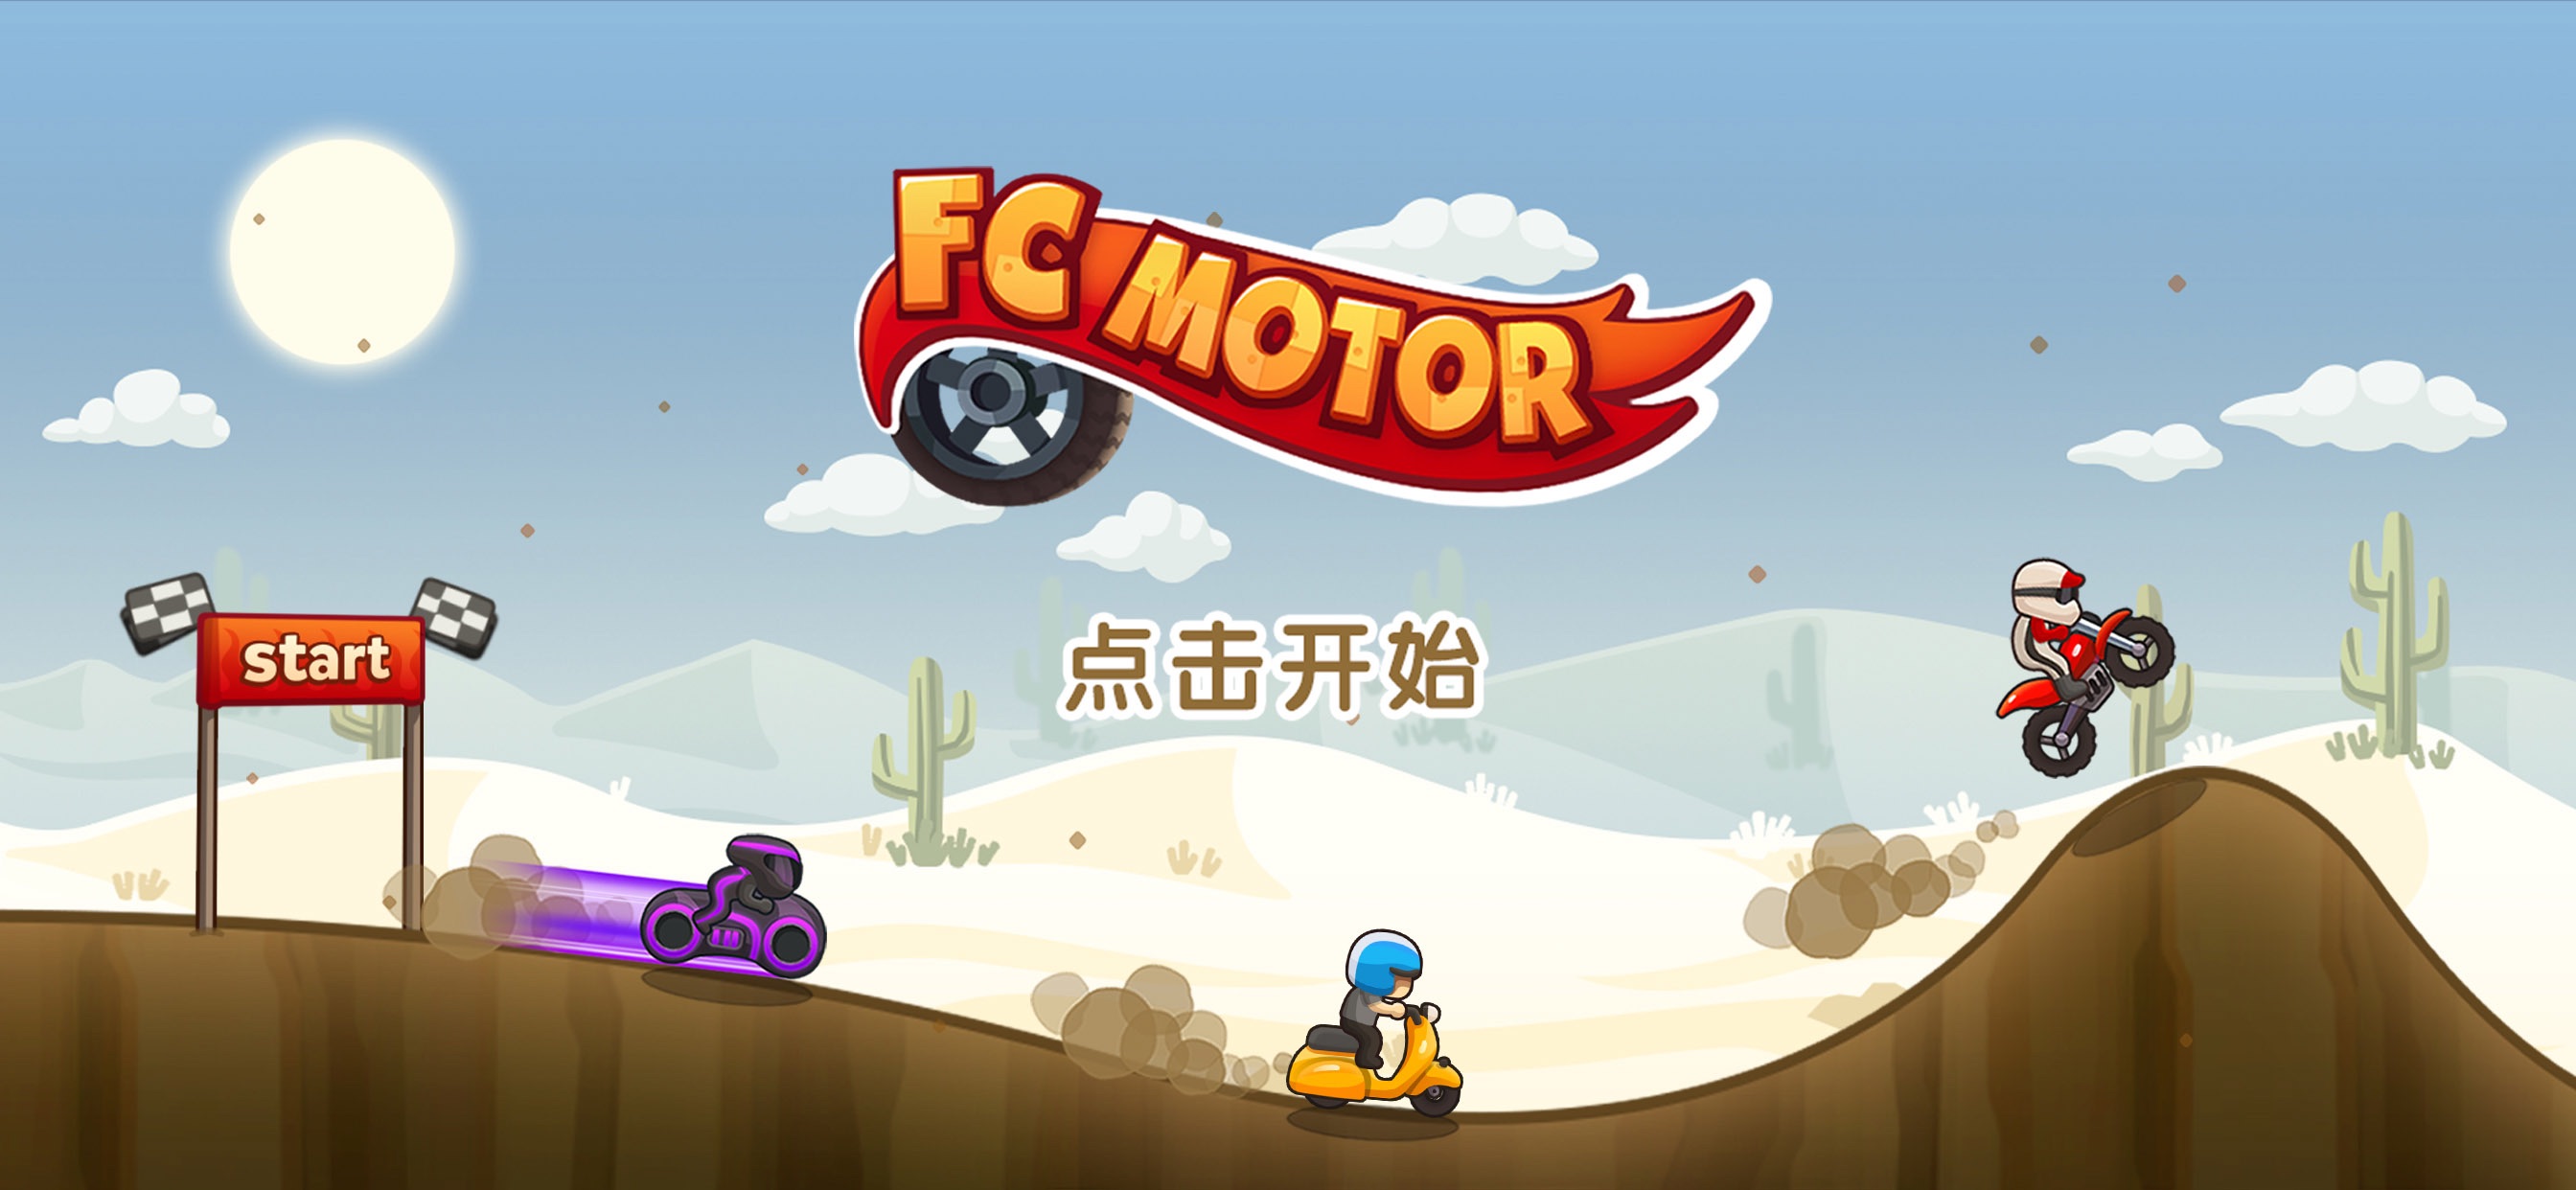 FC MOTOR